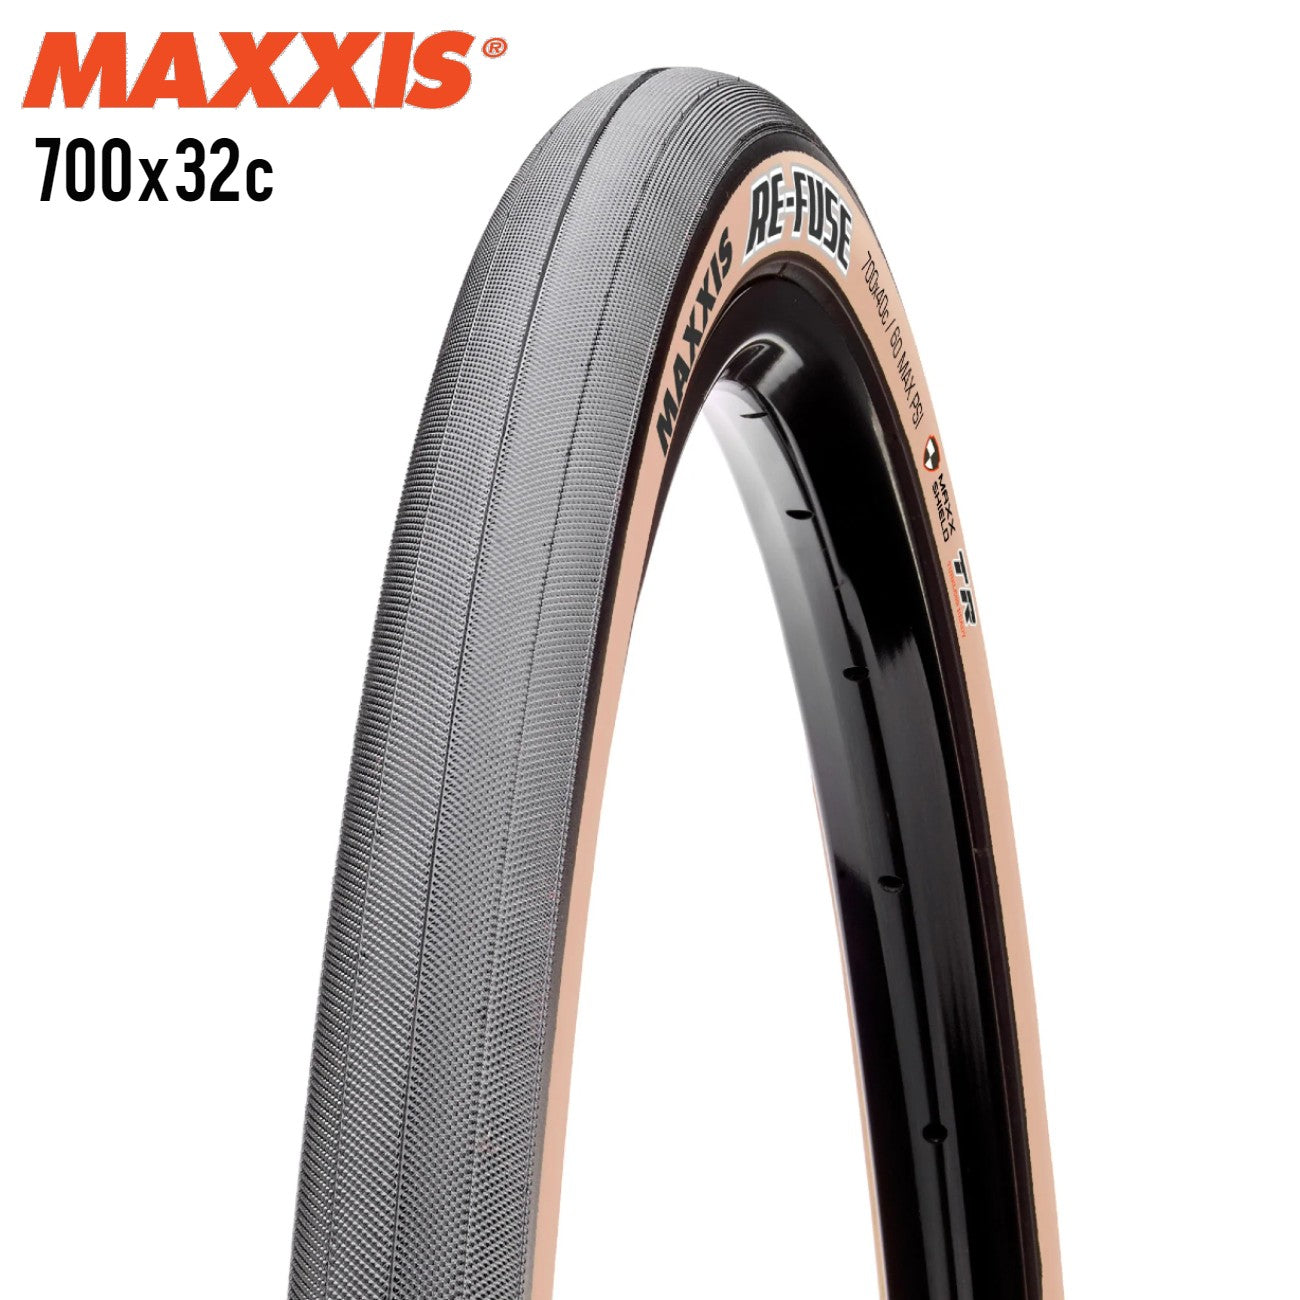 Maxxis Re-Fuse Semi-Slick Gravel Tire 700c EXO Tubeless Ready - Tan